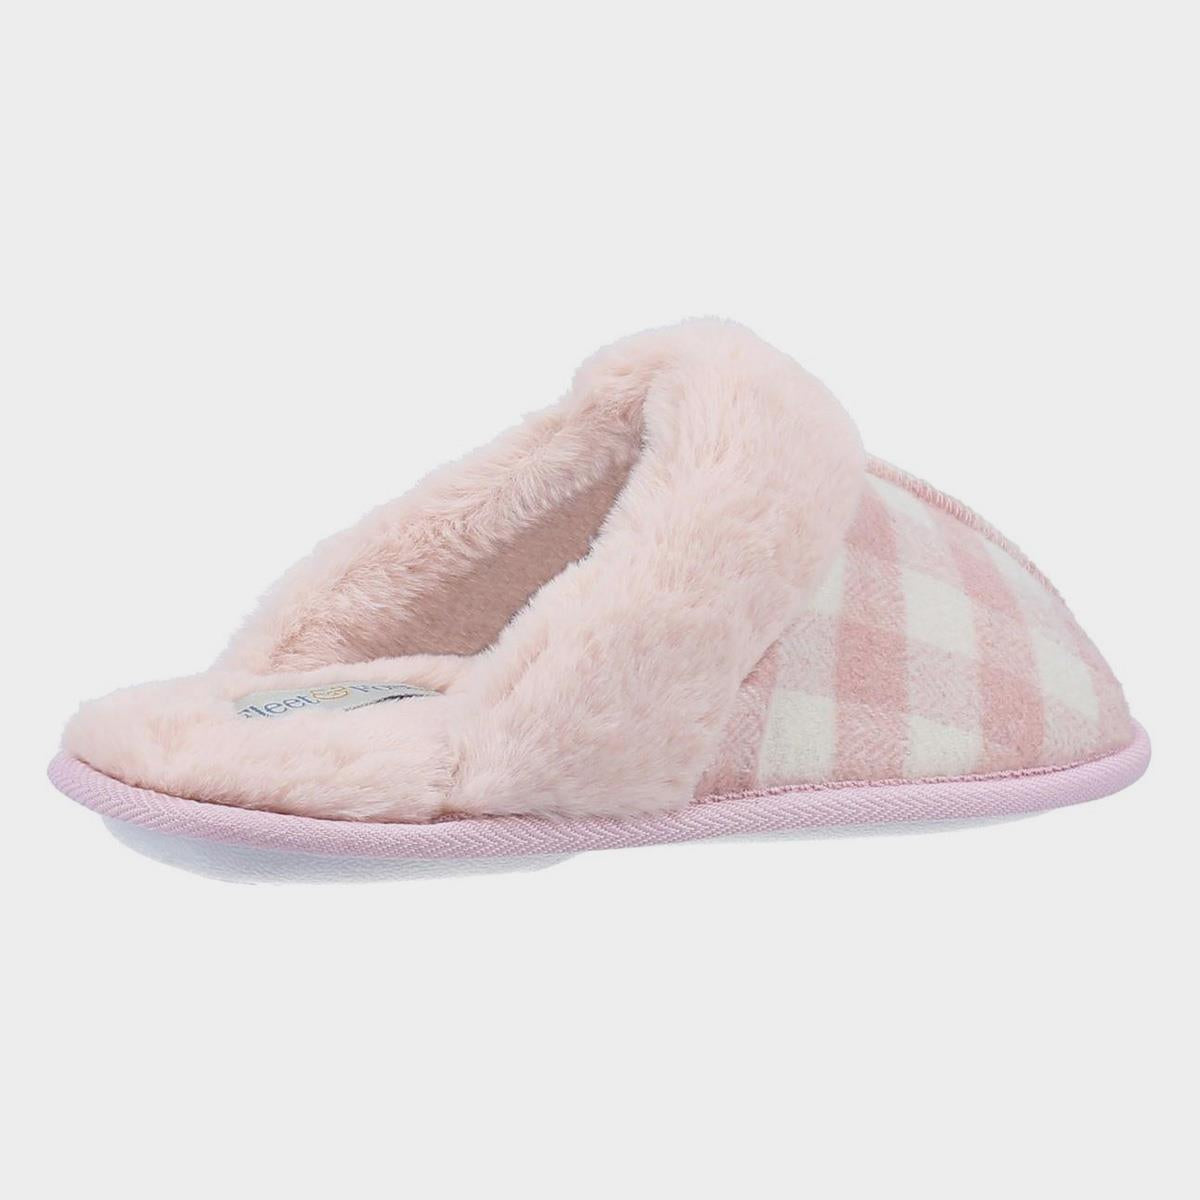 Fleet & Foster Neath pink luxury check mule slipper with gentle warm lining